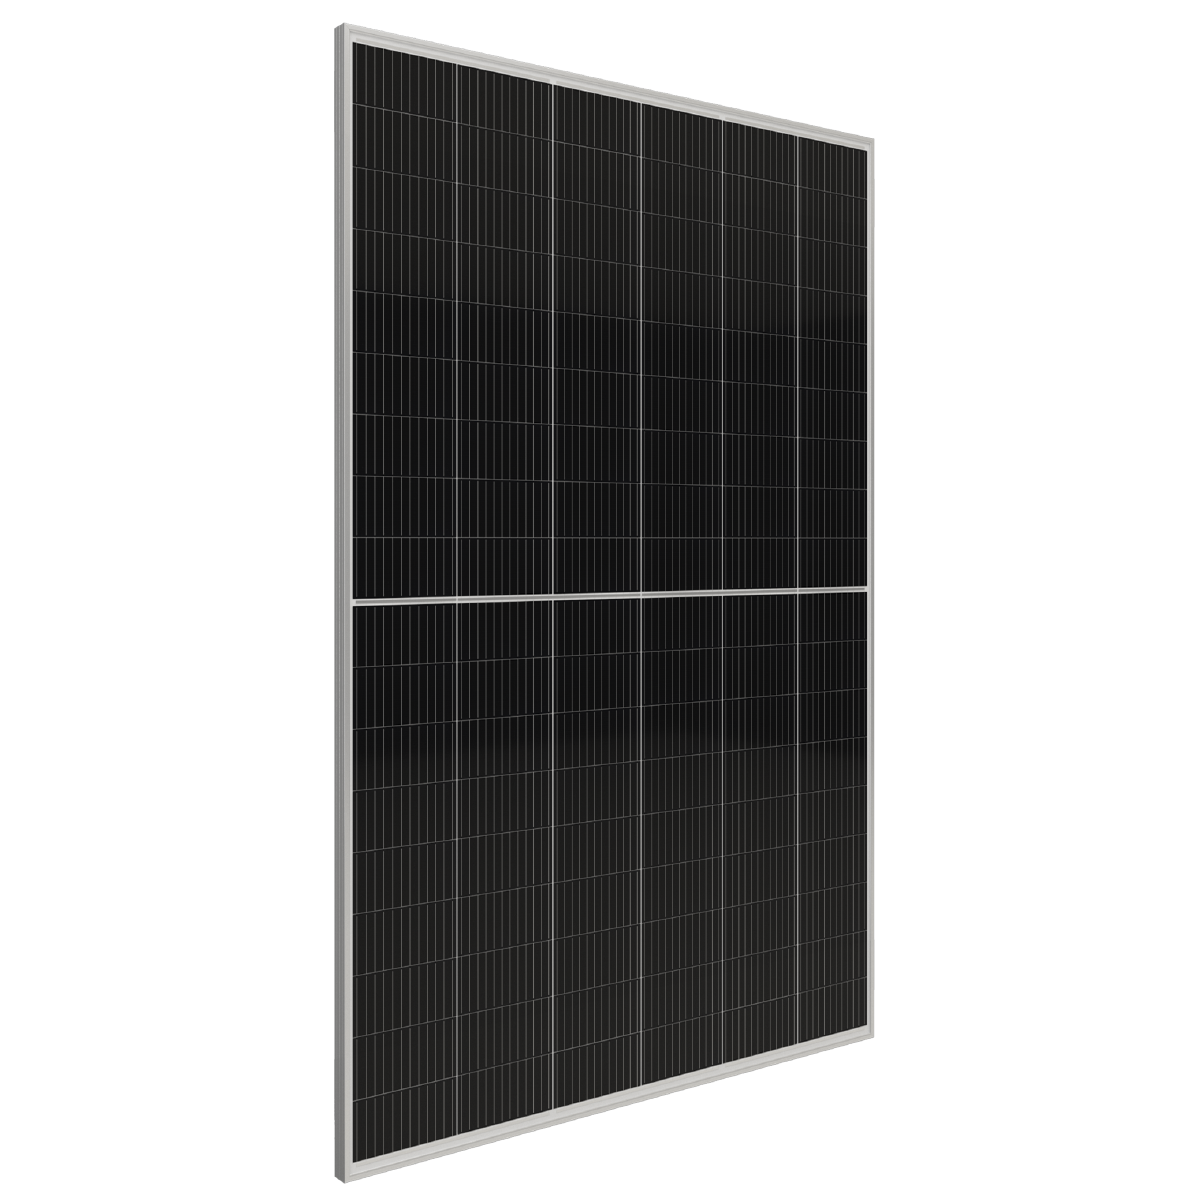 TommaTech 530Wp M12 108PM Cells Half-Cut MB Solar Panel